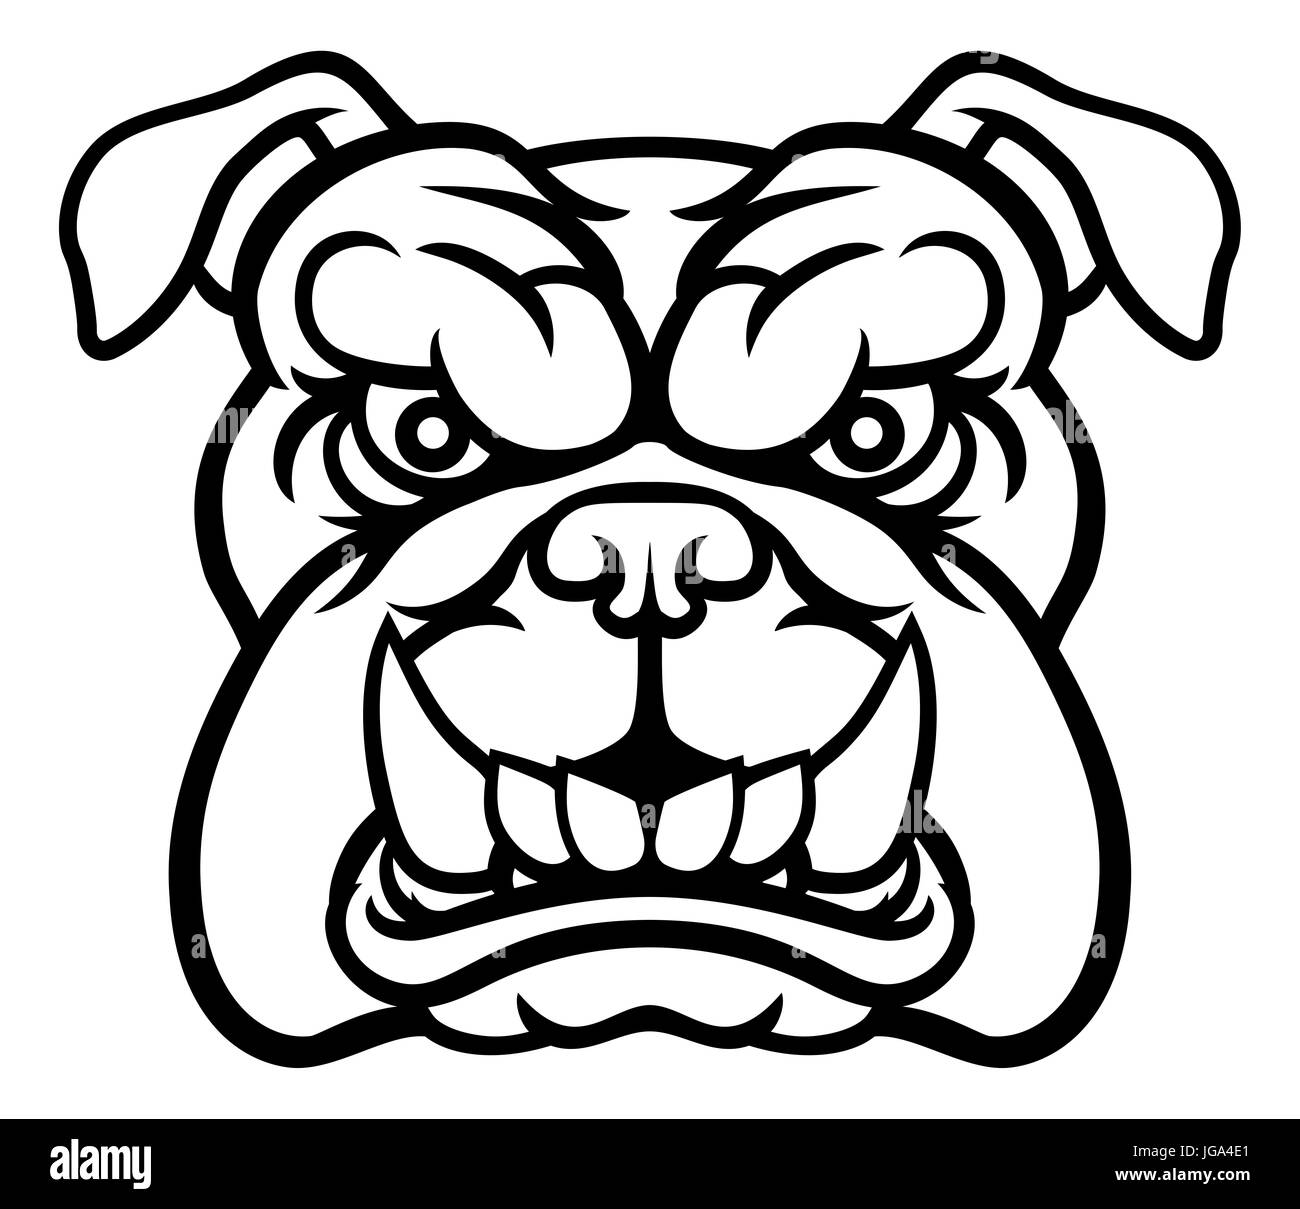 Bulldog clip art hi-res stock photography and images - Alamy